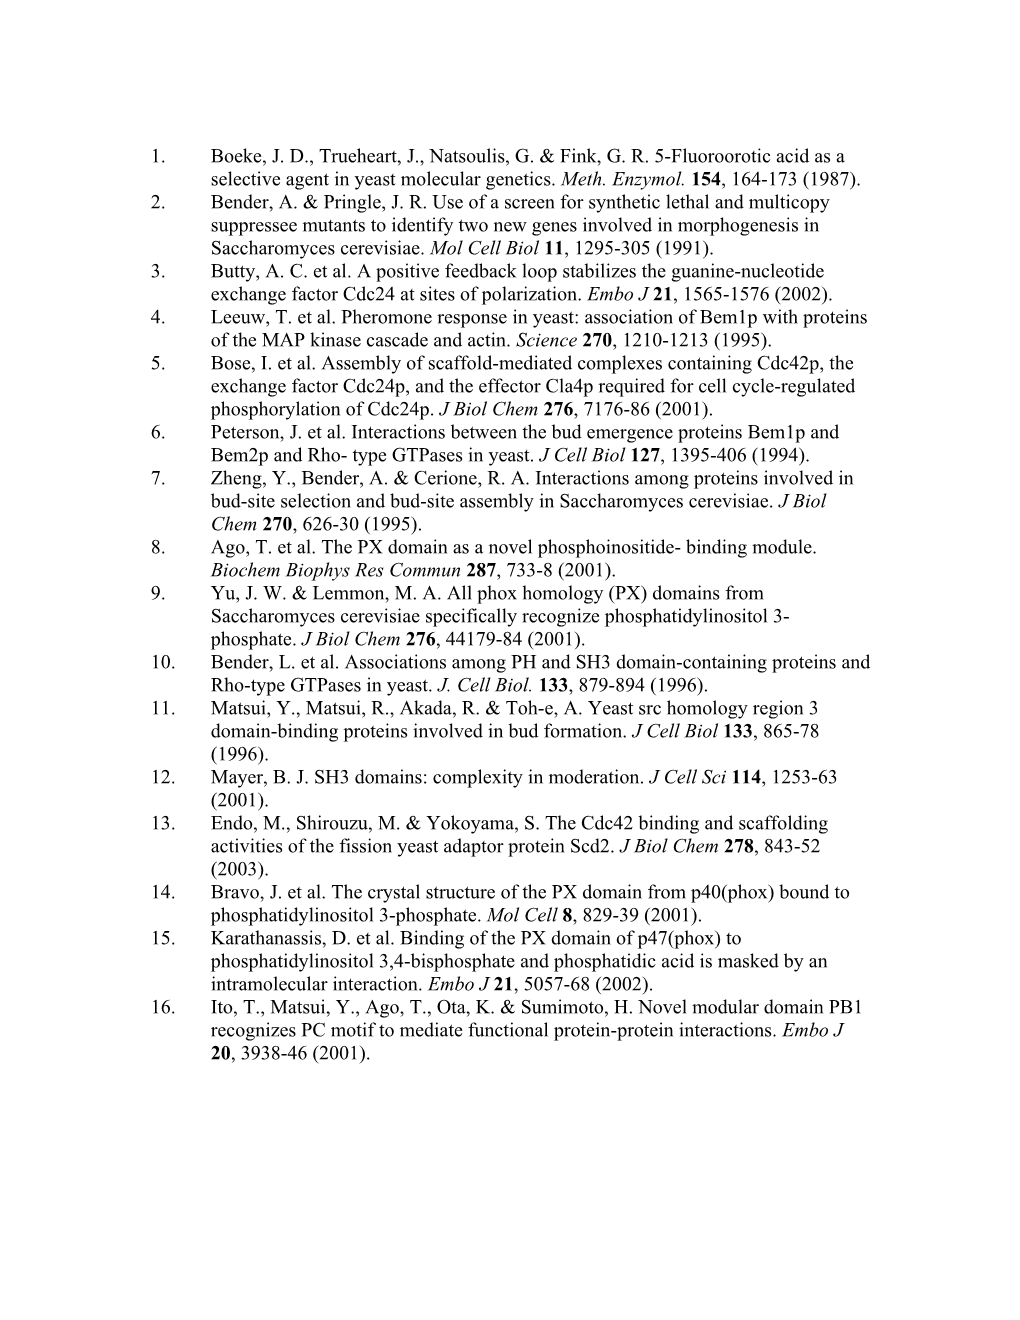 1. Boeke, J. D., Trueheart, J., Natsoulis, G. & Fink, G. R. 5-Fluoroorotic Acid As a Selective